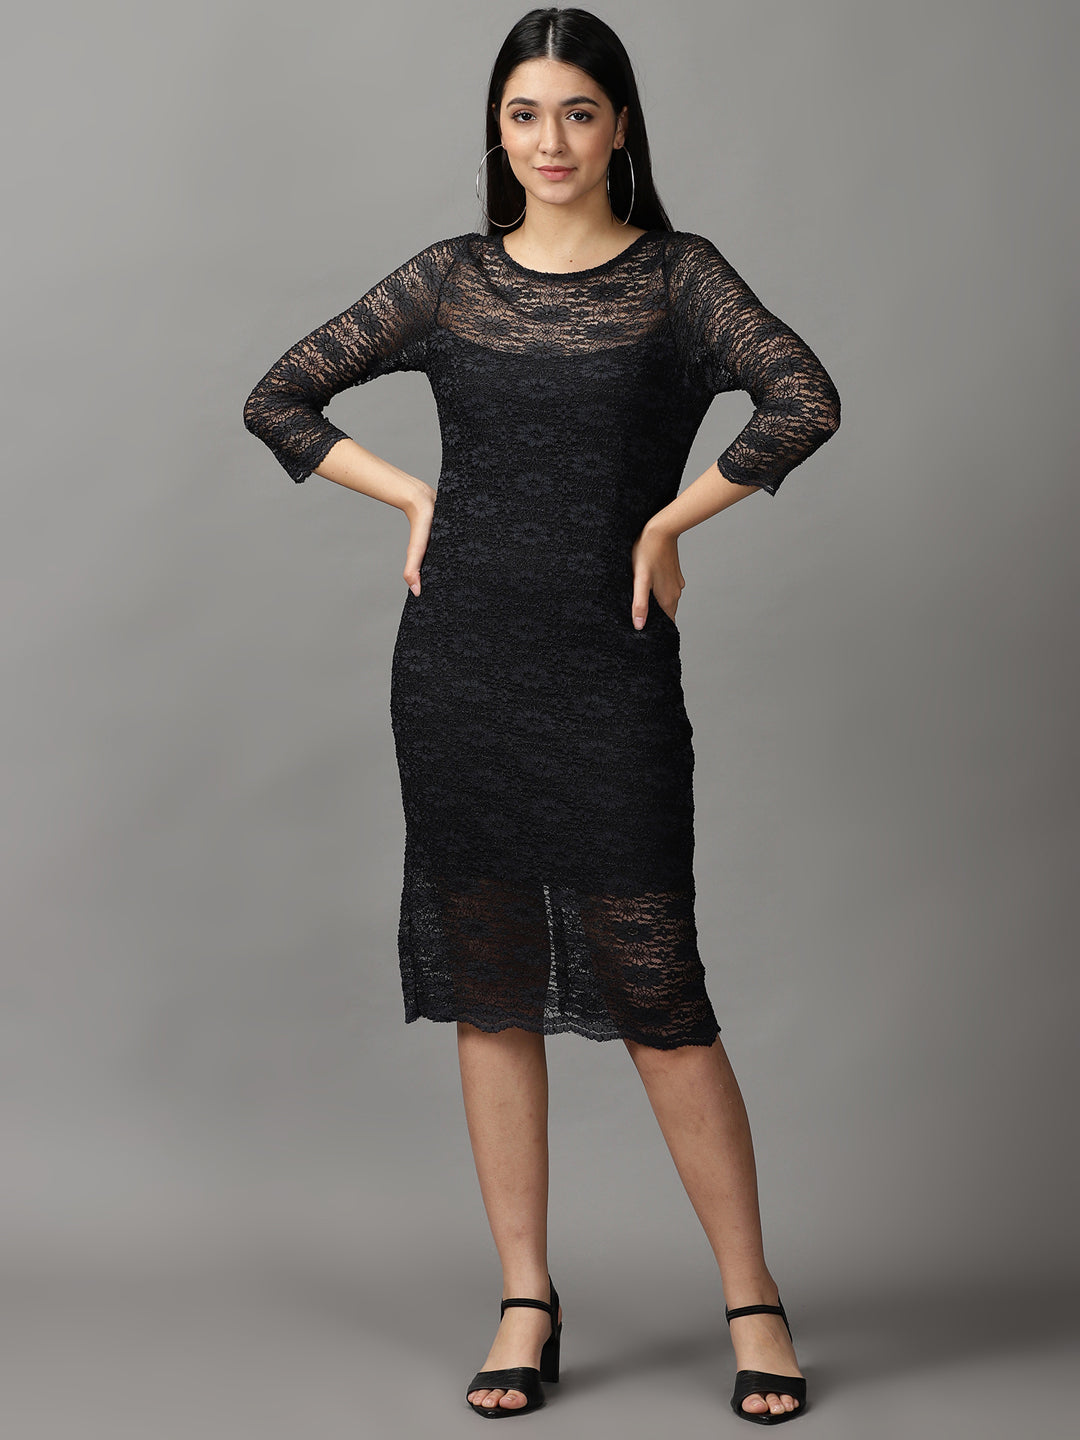 Women's Black Solid Bodycon Dress